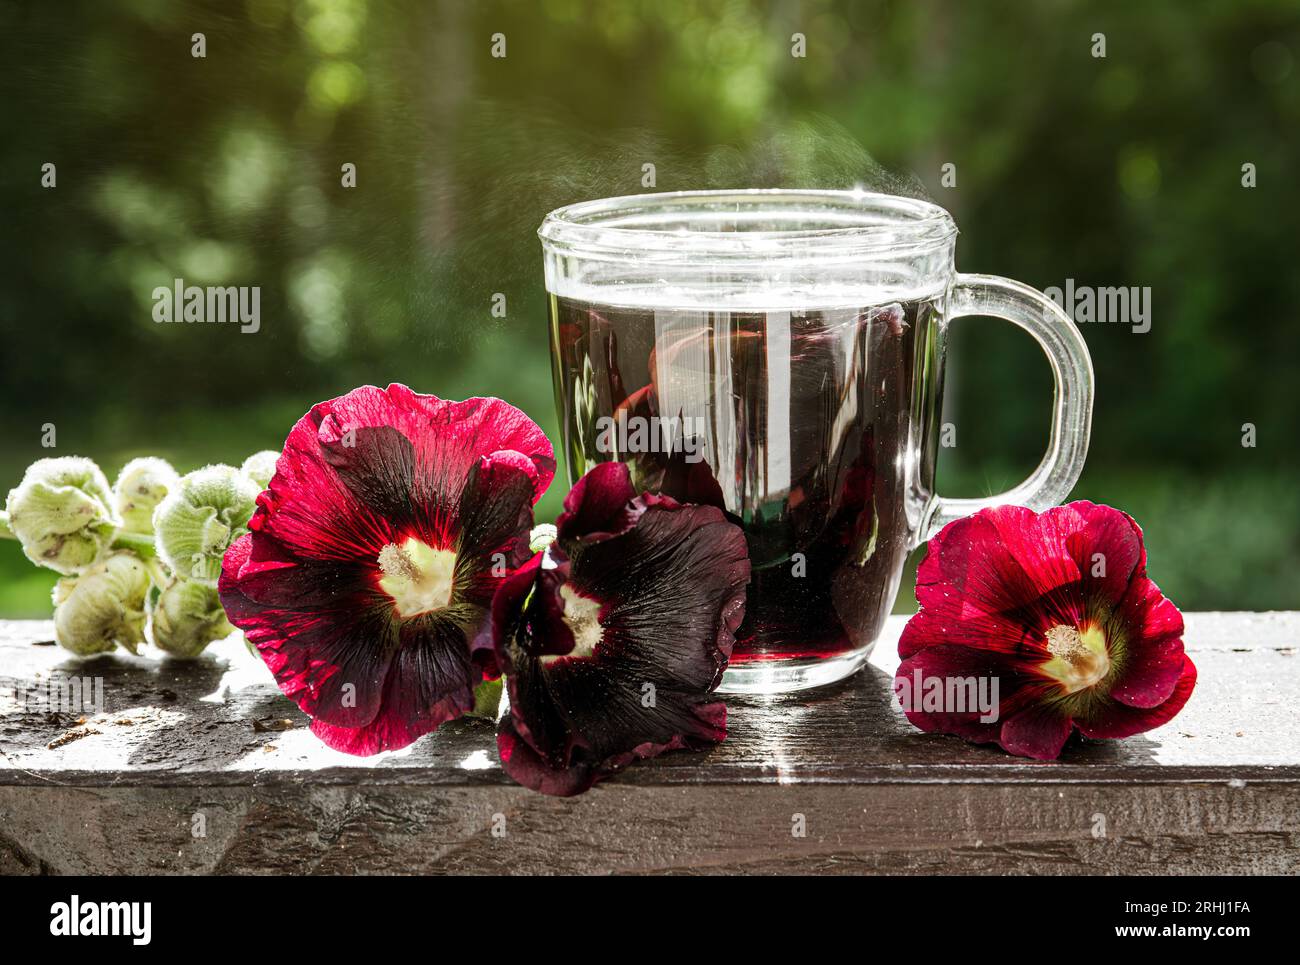 Herbal medicinal tea drink made of Alcea Rosea Nigra, Alcea rosea, the common hollyhock, Alcea rosea. Glass cup with tea against nature background. Stock Photo